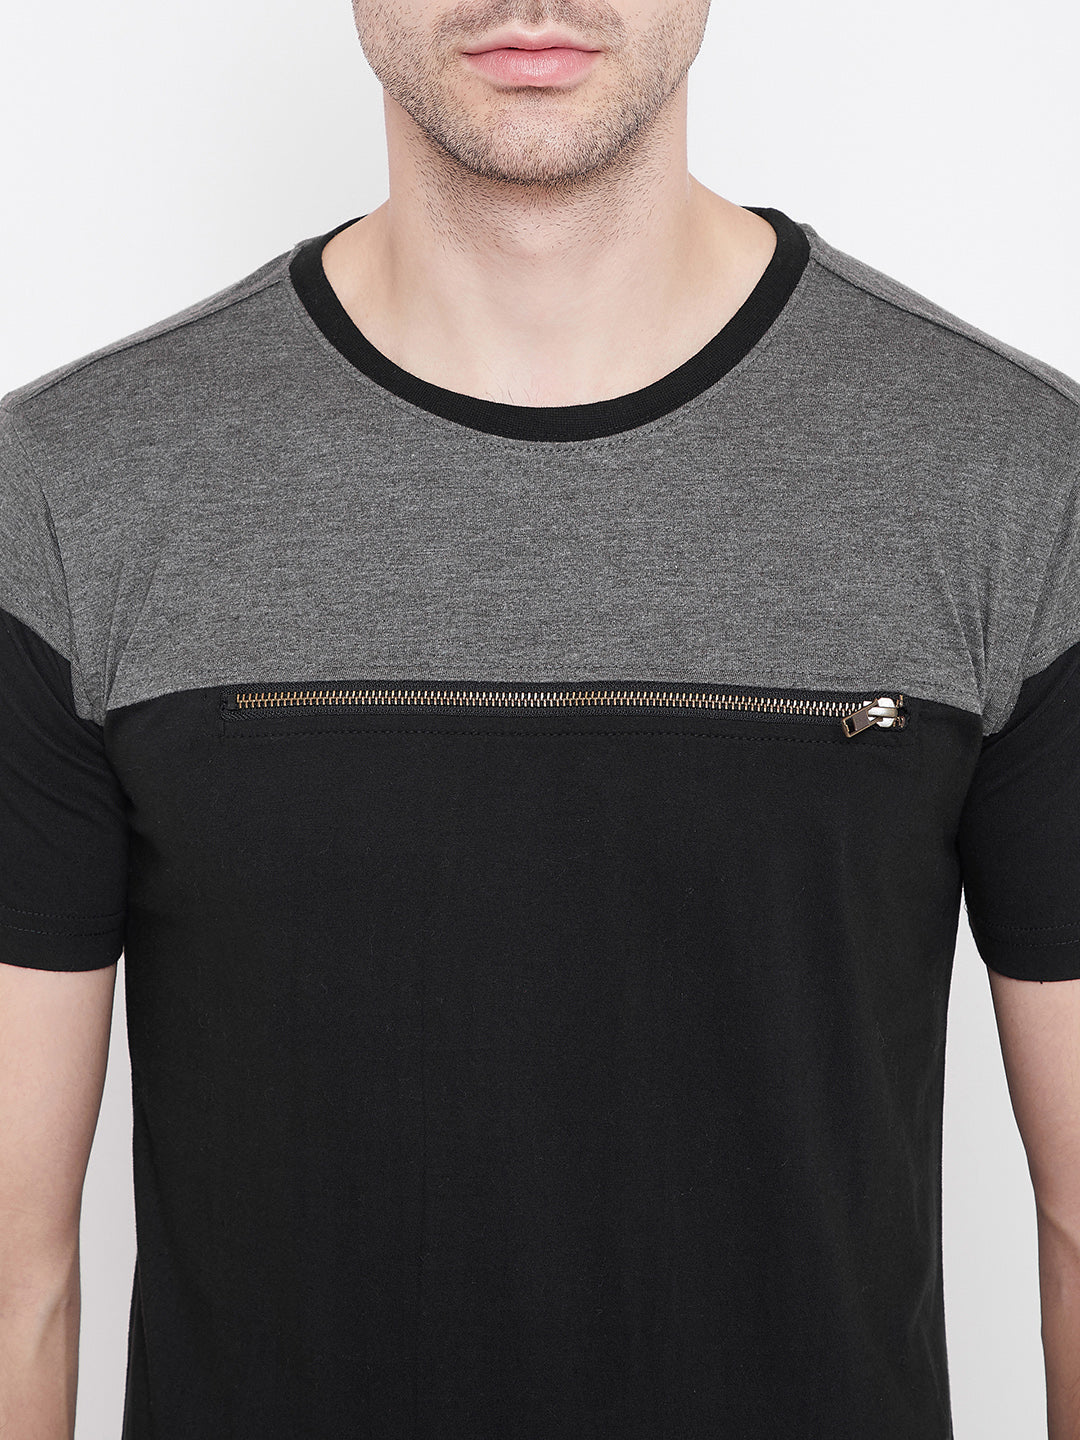 PUNK-ZIPPER Black & Grey T-shirt